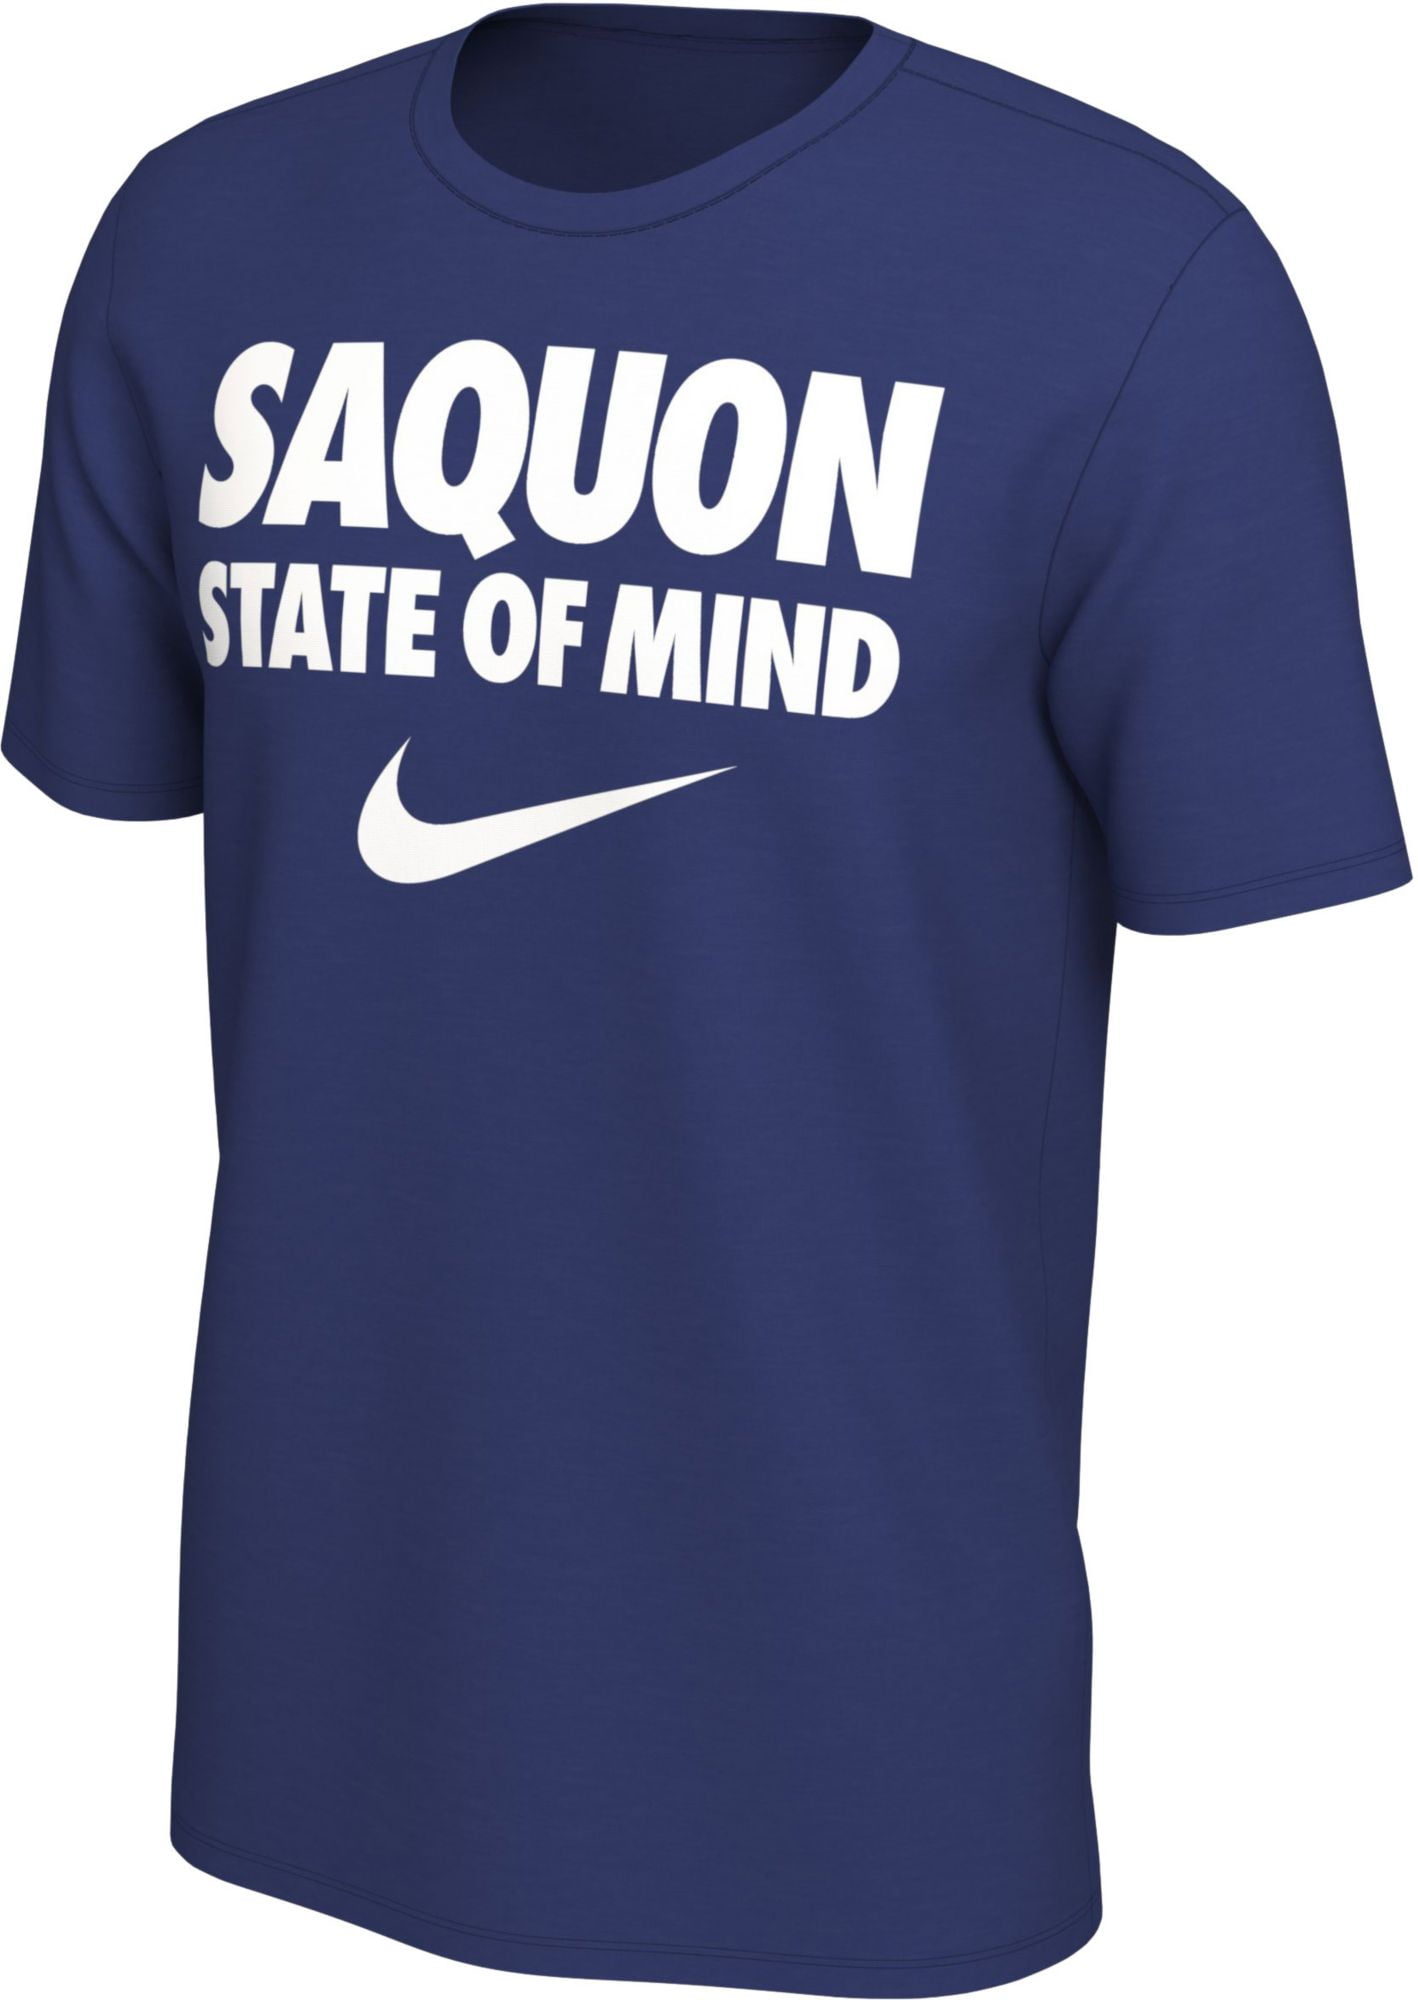 saquon nike shirt